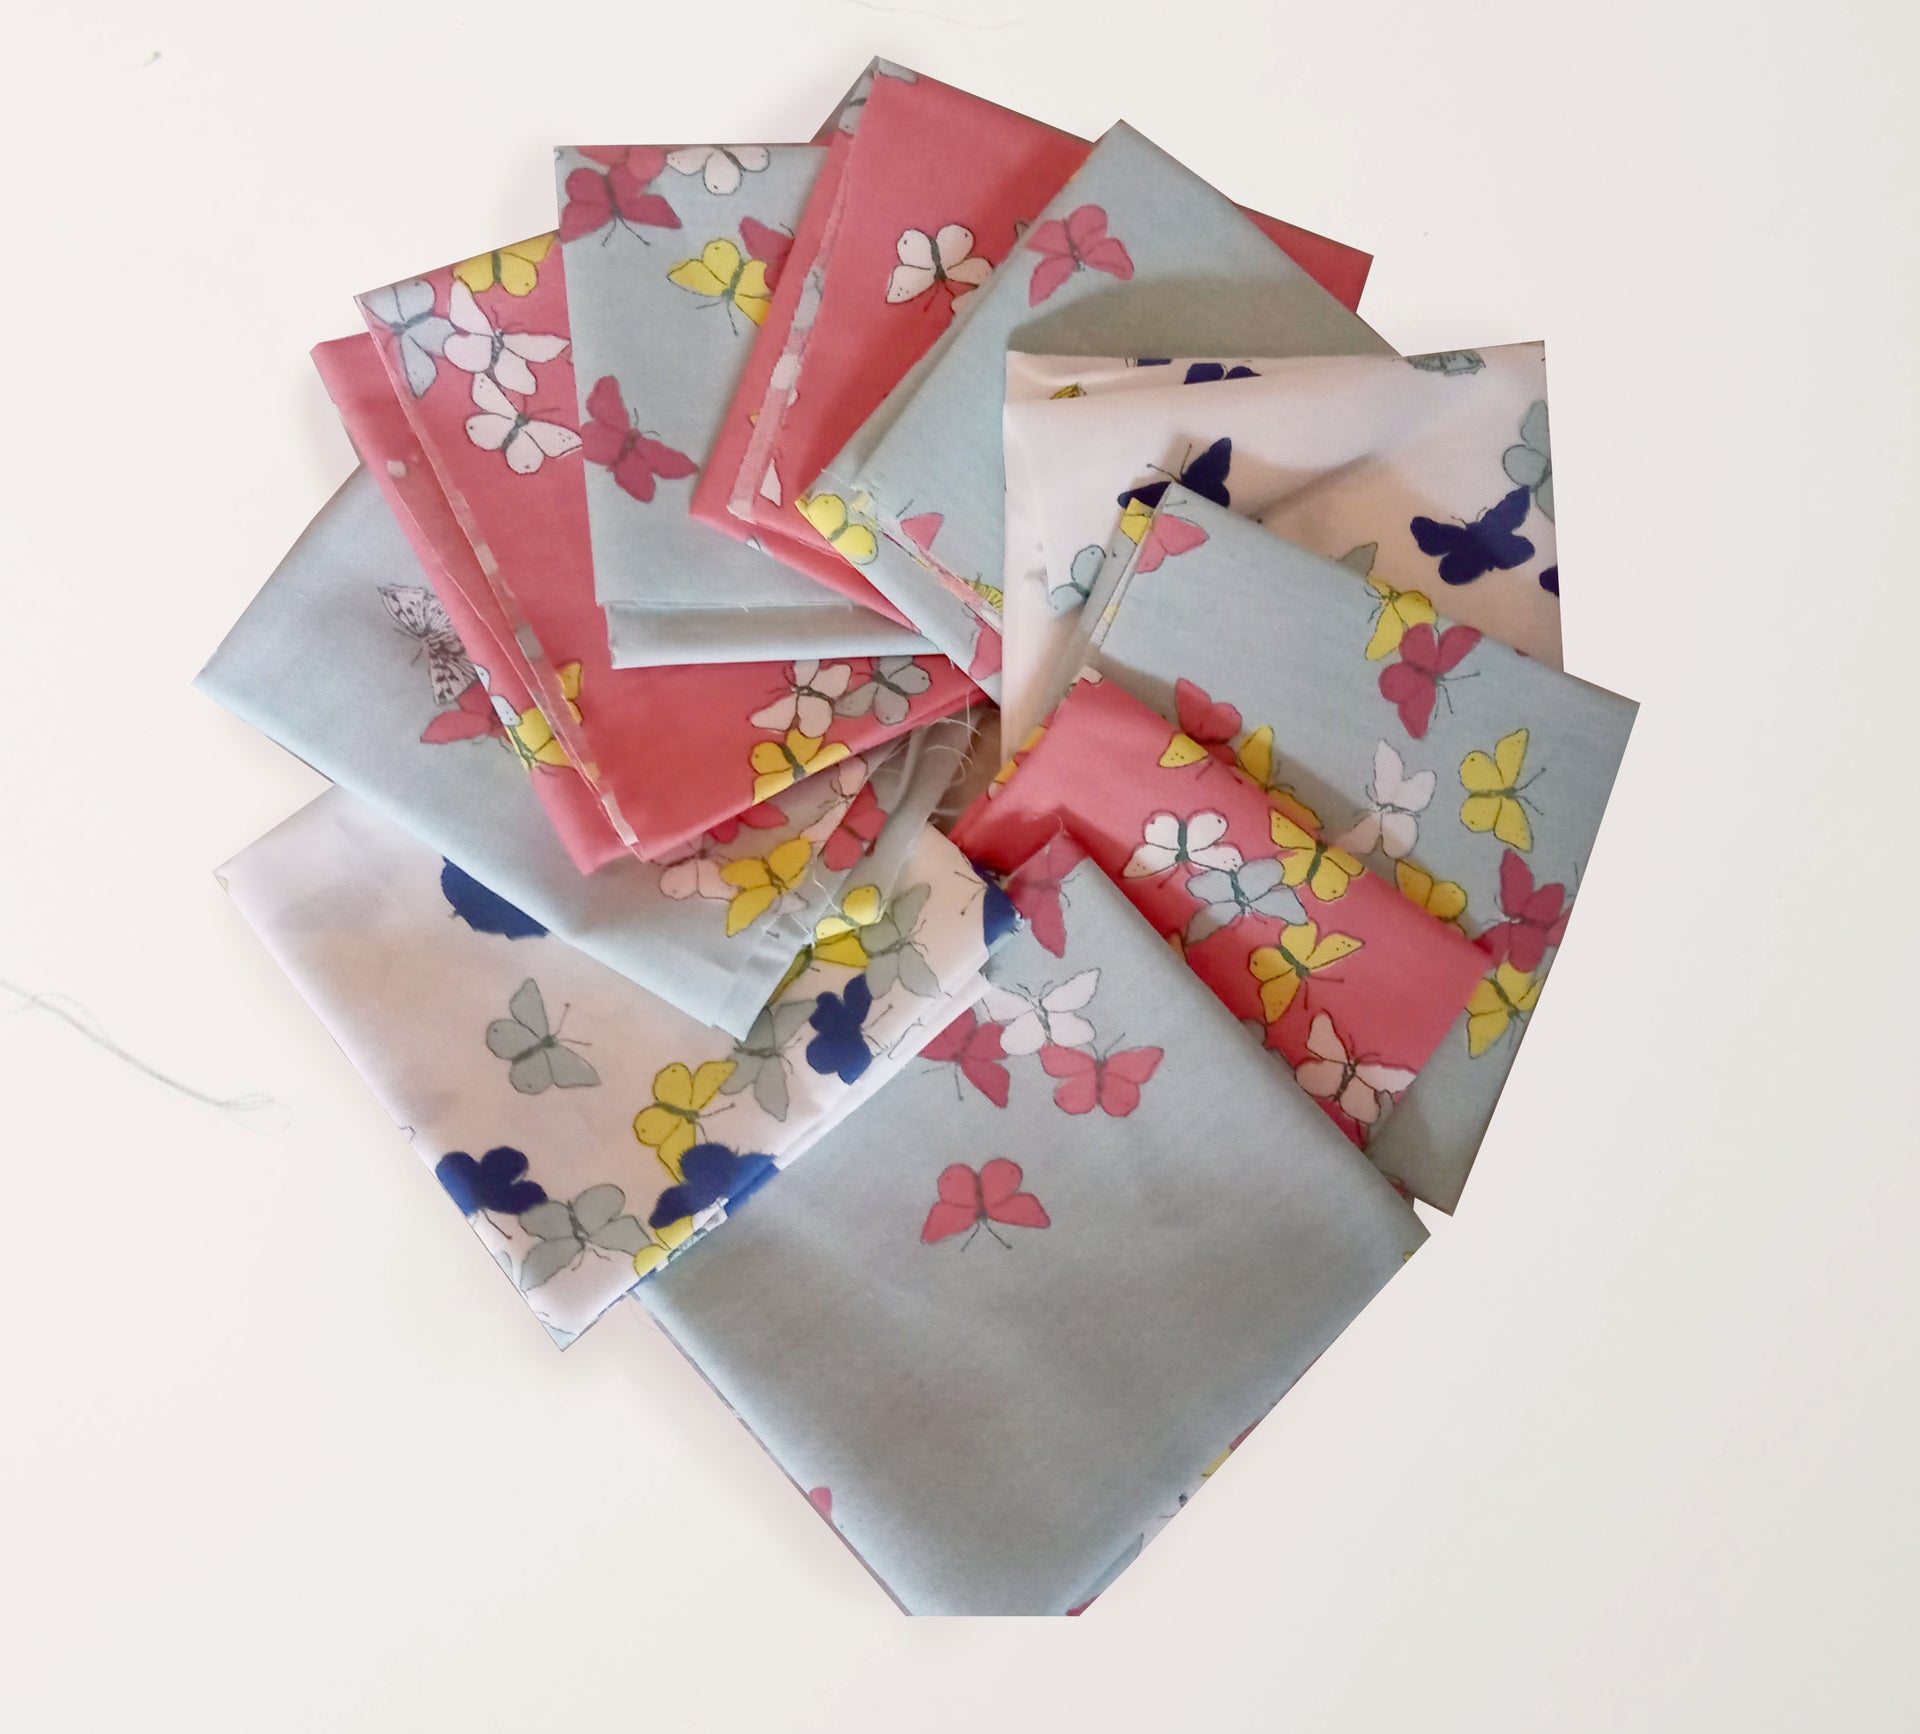 Fabric Remnants Bundle with Butterflies Prints | Zero Waste